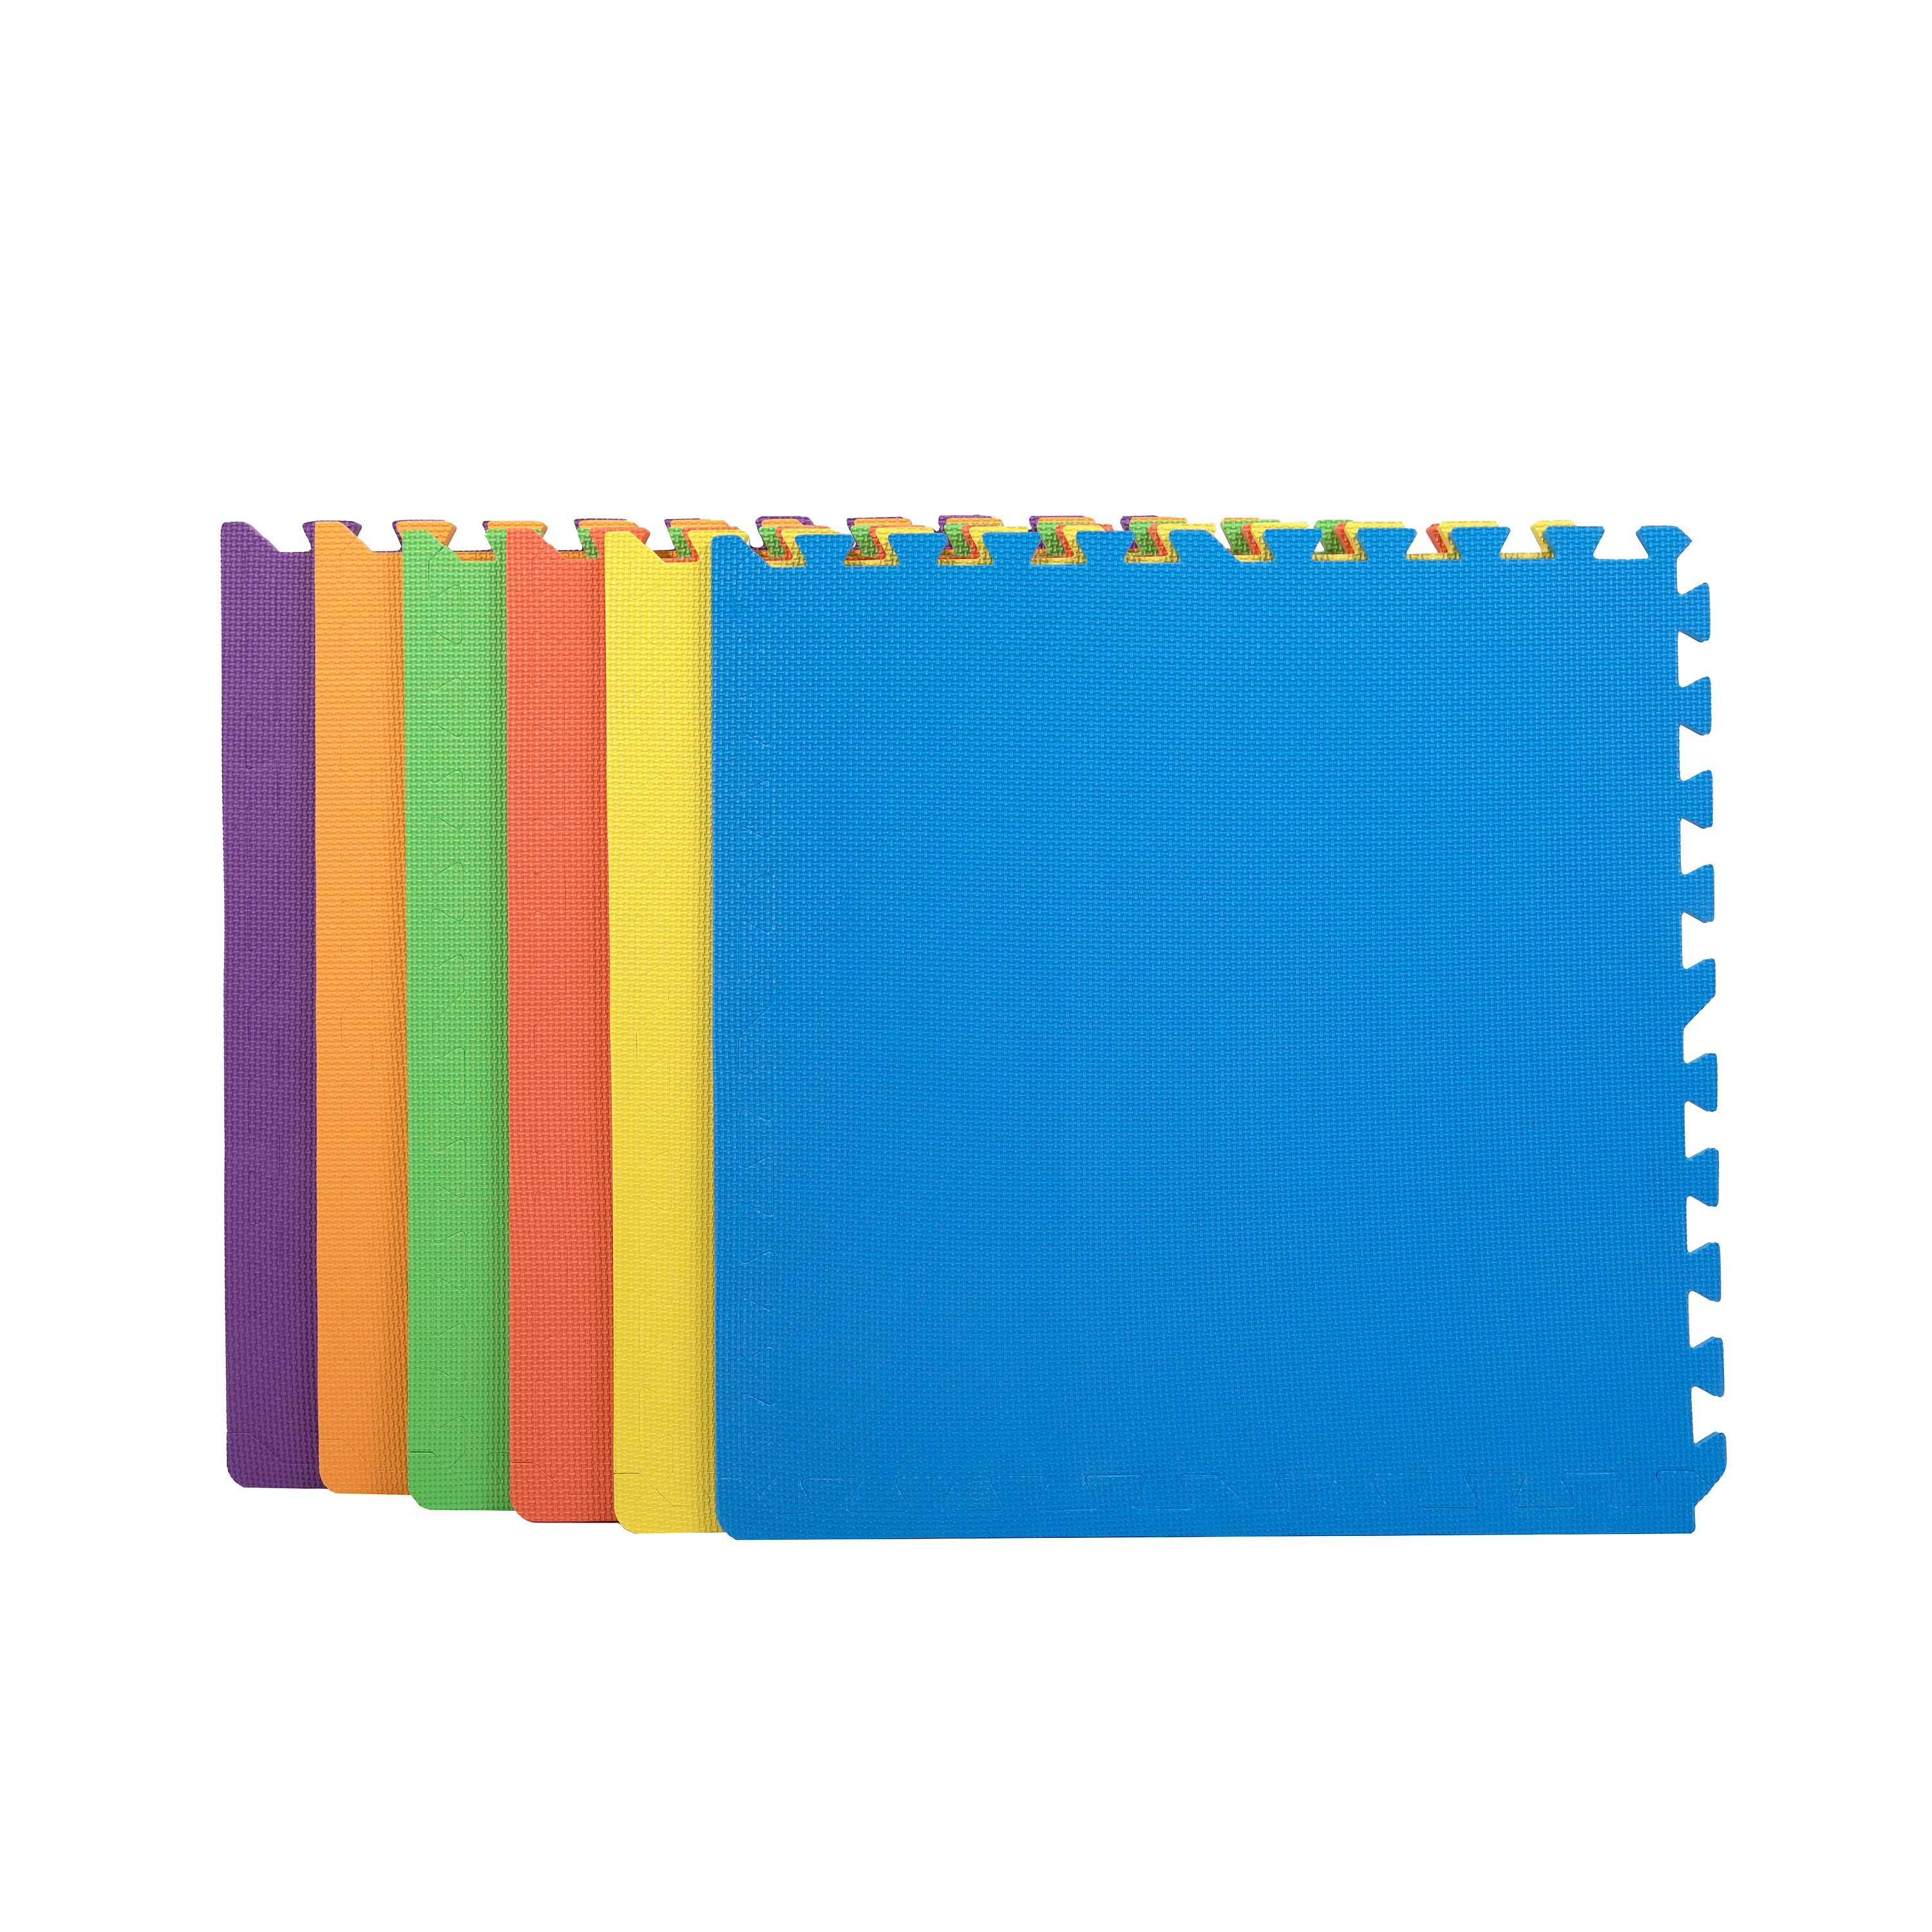 FlooringInc Rainbow Colored Foam Tile Playmats 2ft x 2ft Children's Portable Soft Flooring, 6 Tile Pack - image 5 of 7